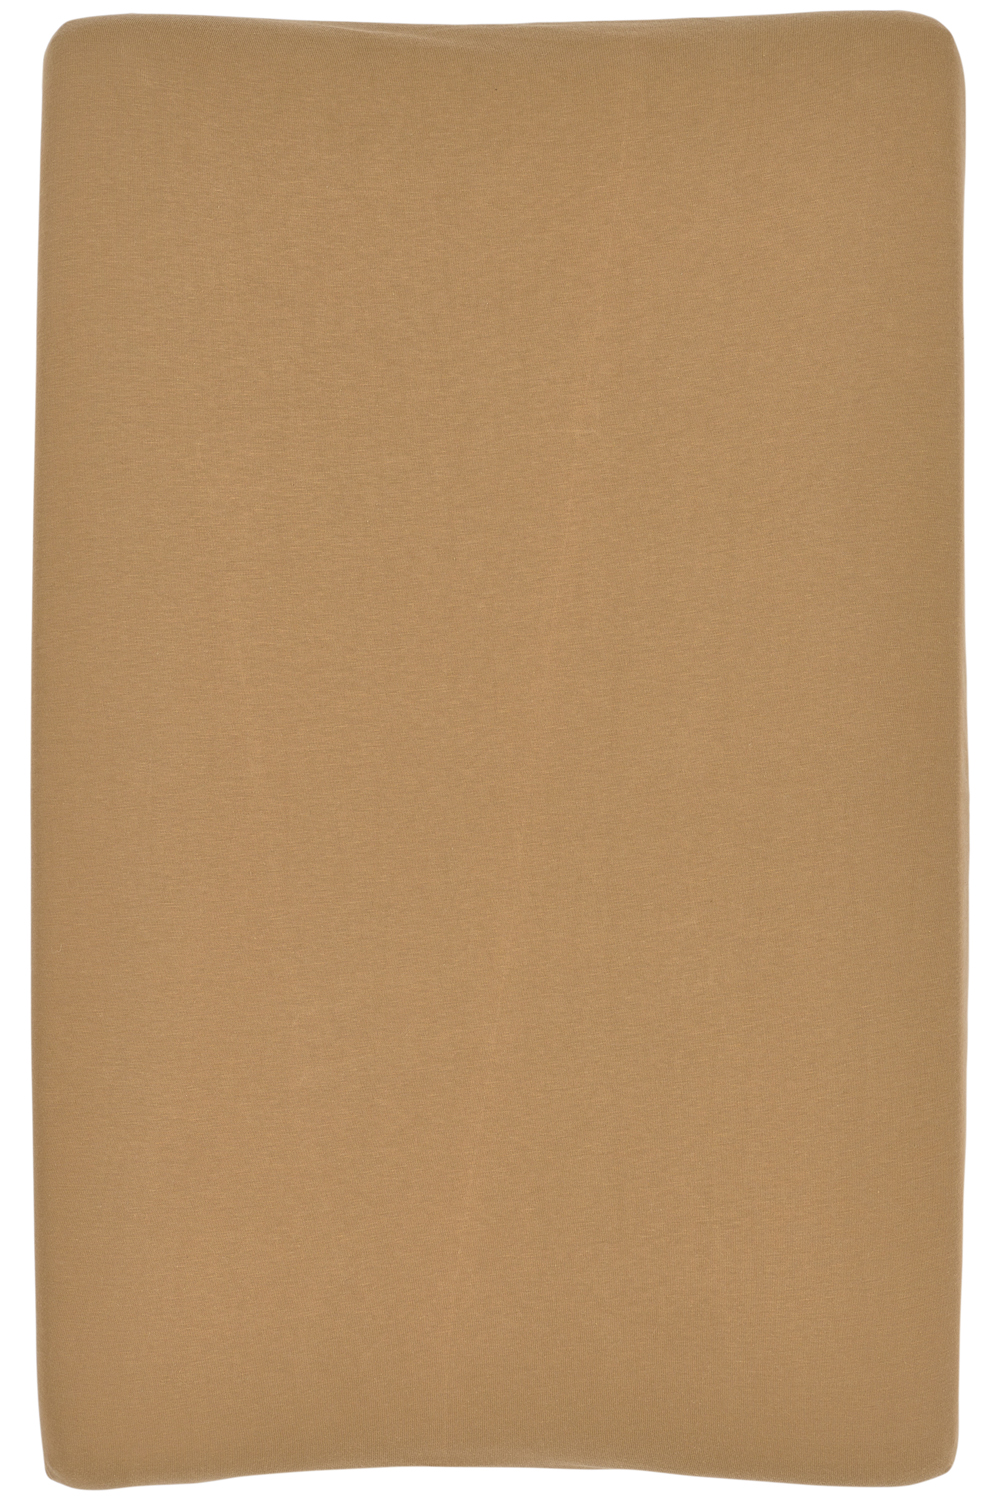 Aankleedkussenhoes Basic Jersey 2-pack - Toffee - 50x70cm